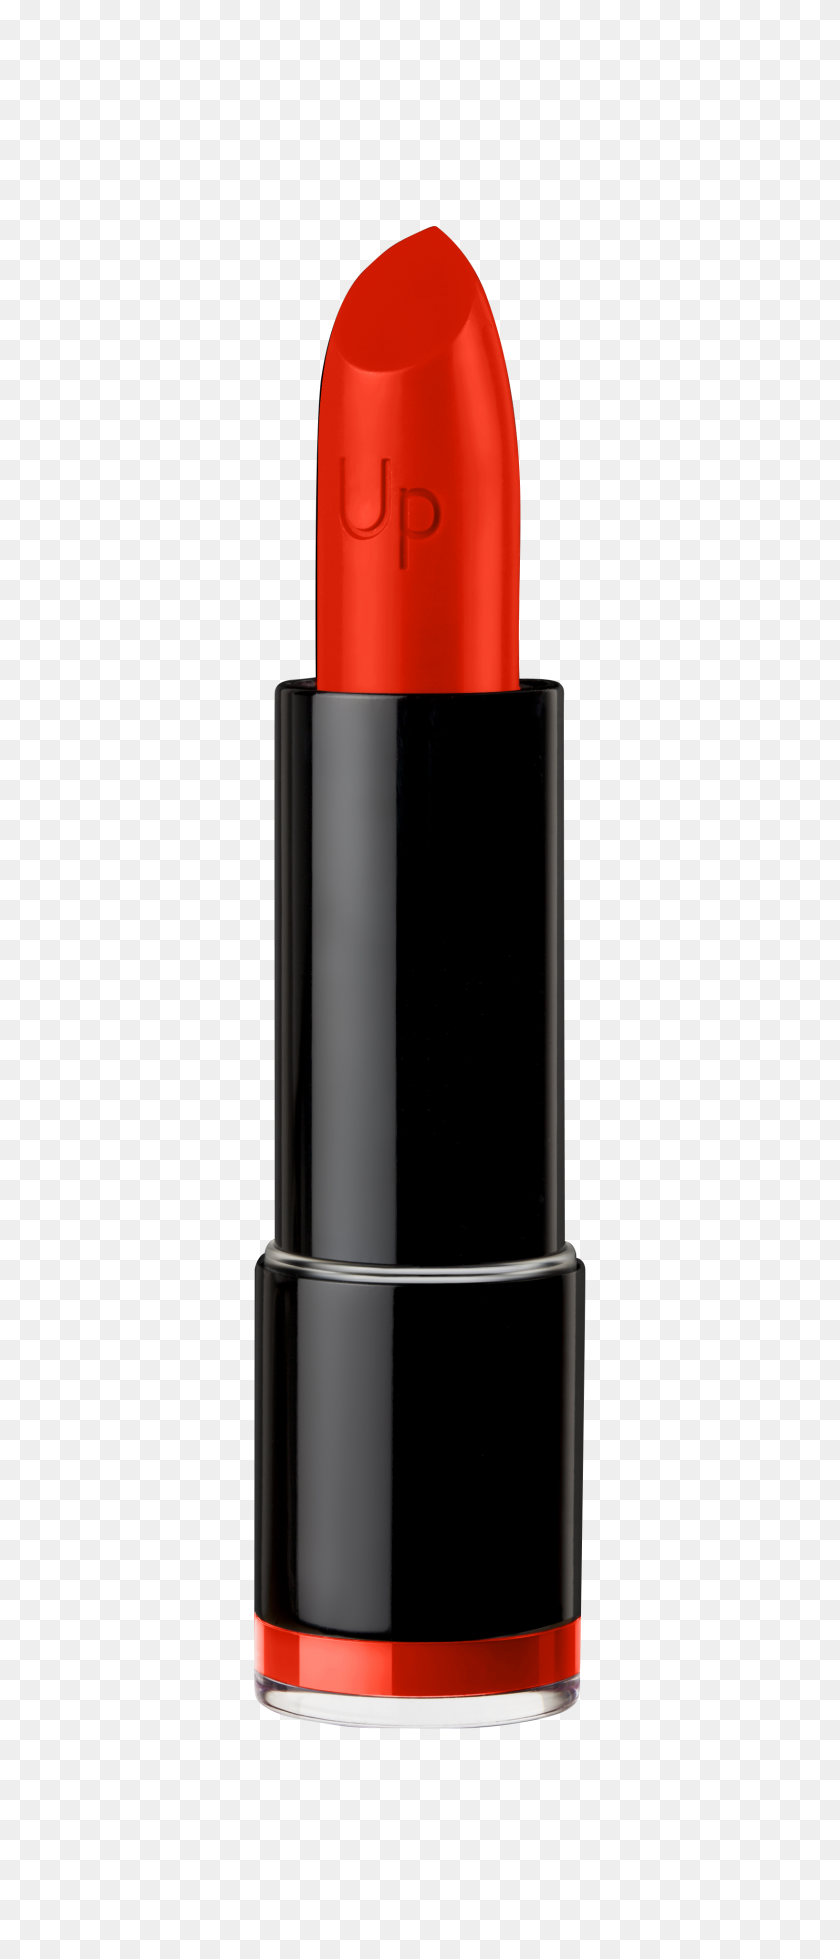 1635x3981 Lipstick Png Images Transparent Free Download - Lipstick PNG